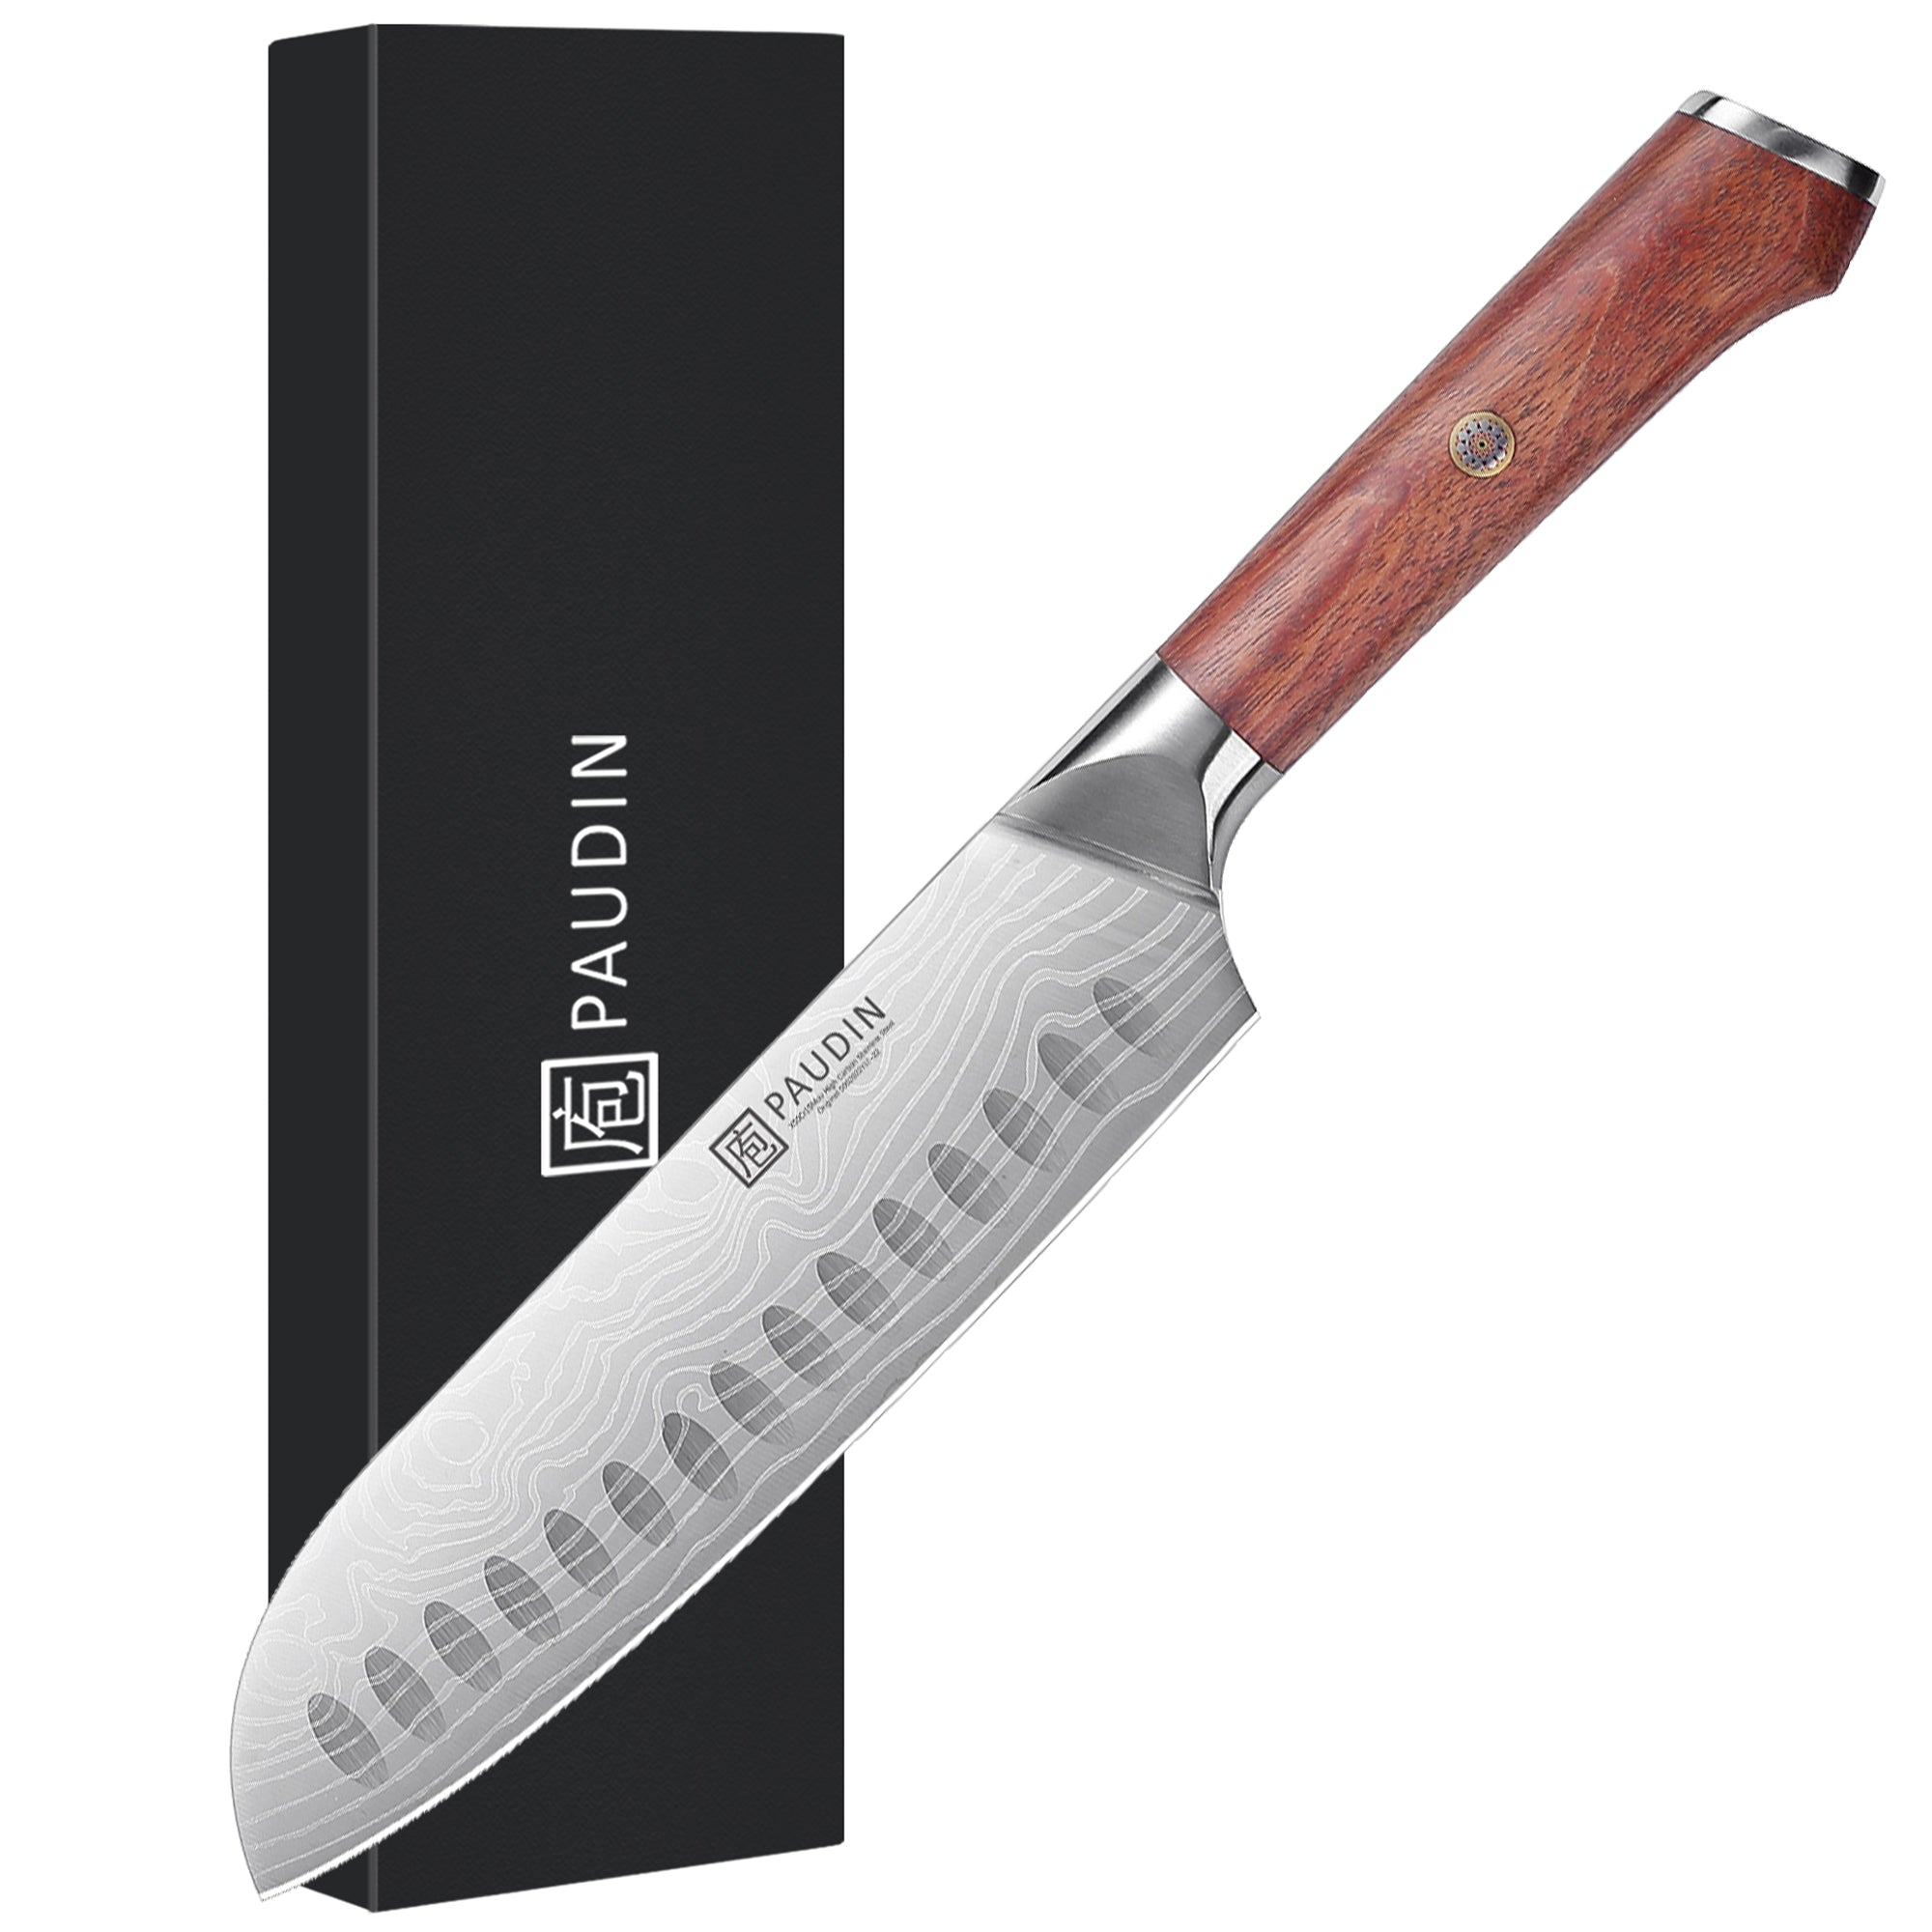 Milanlo Santoku Knife 7'' With Rose Wood Handle